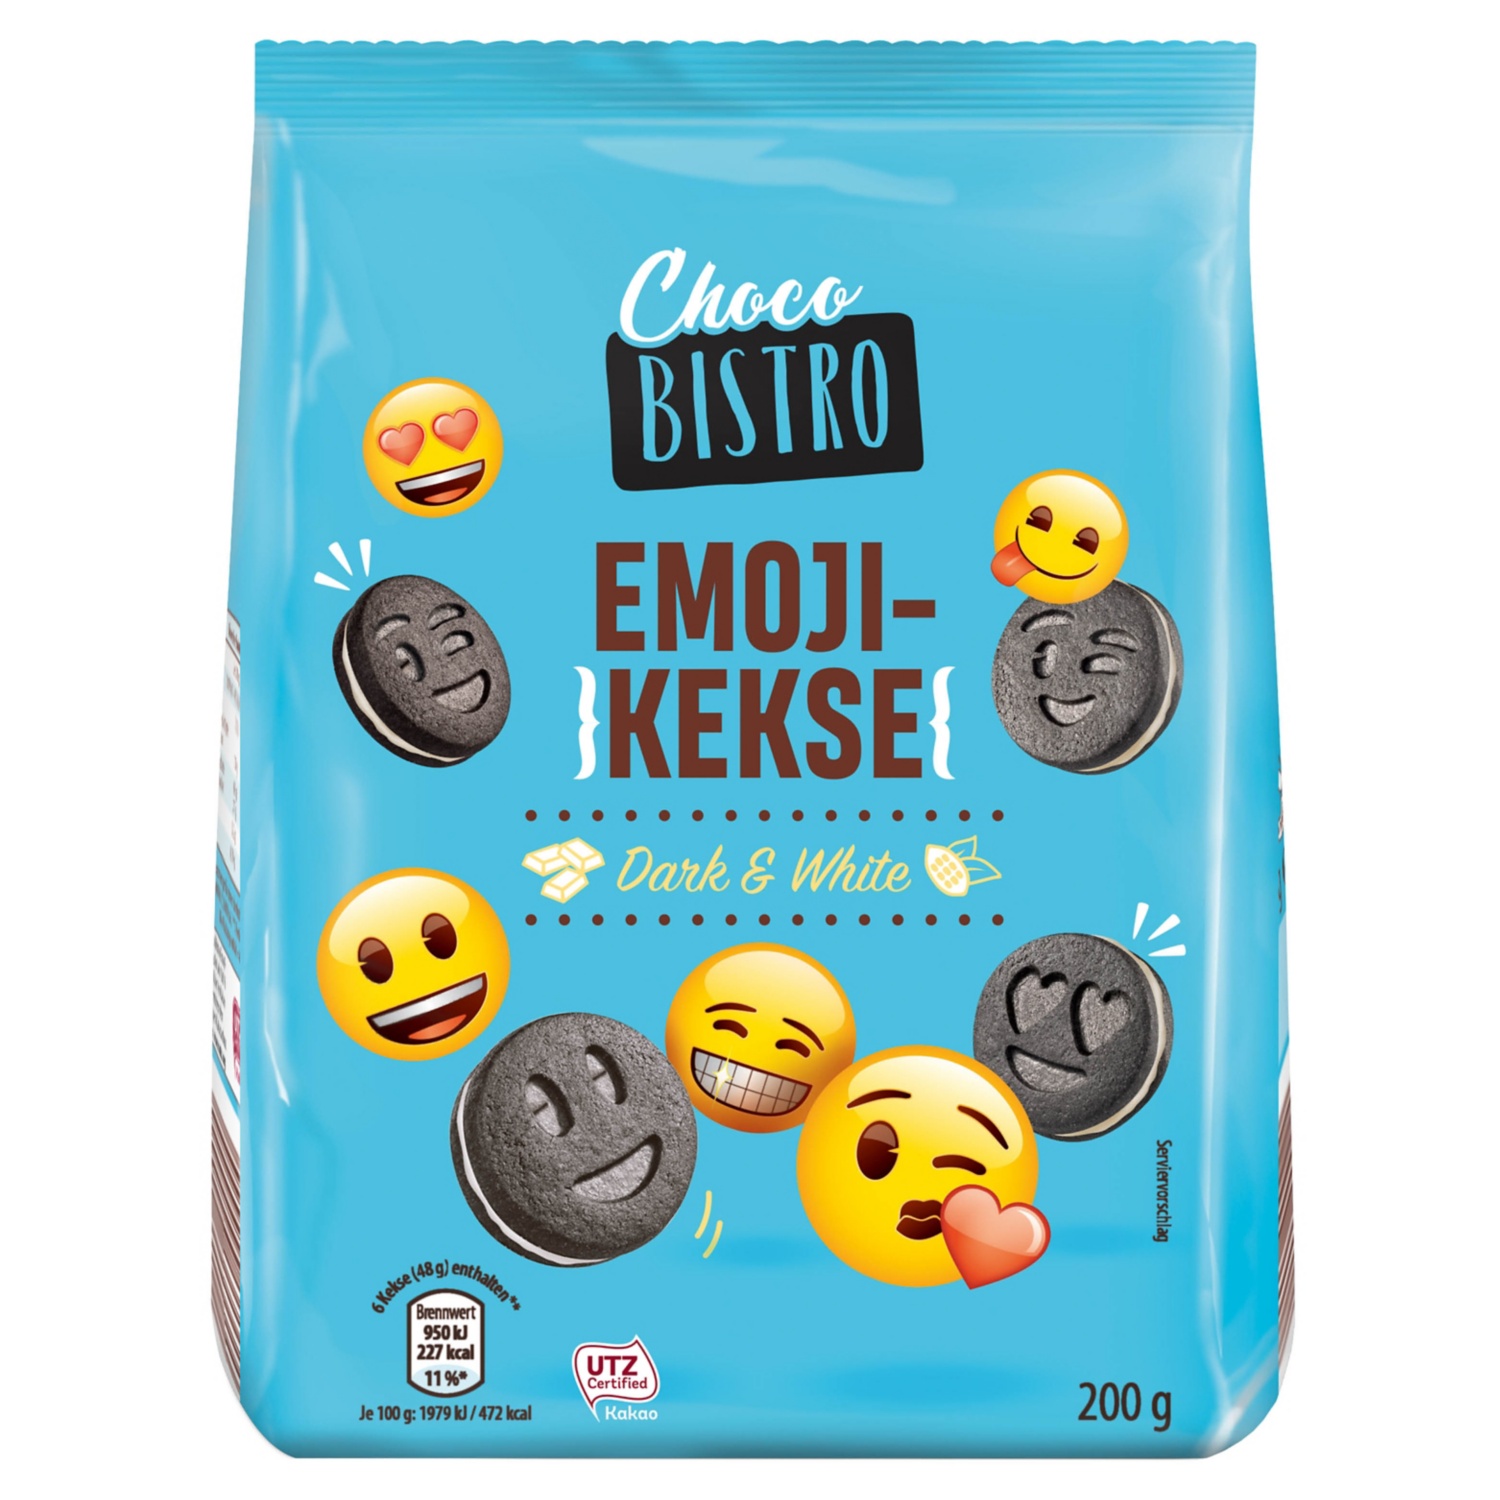 Choco BISTRO Emoji-Kekse 200 g